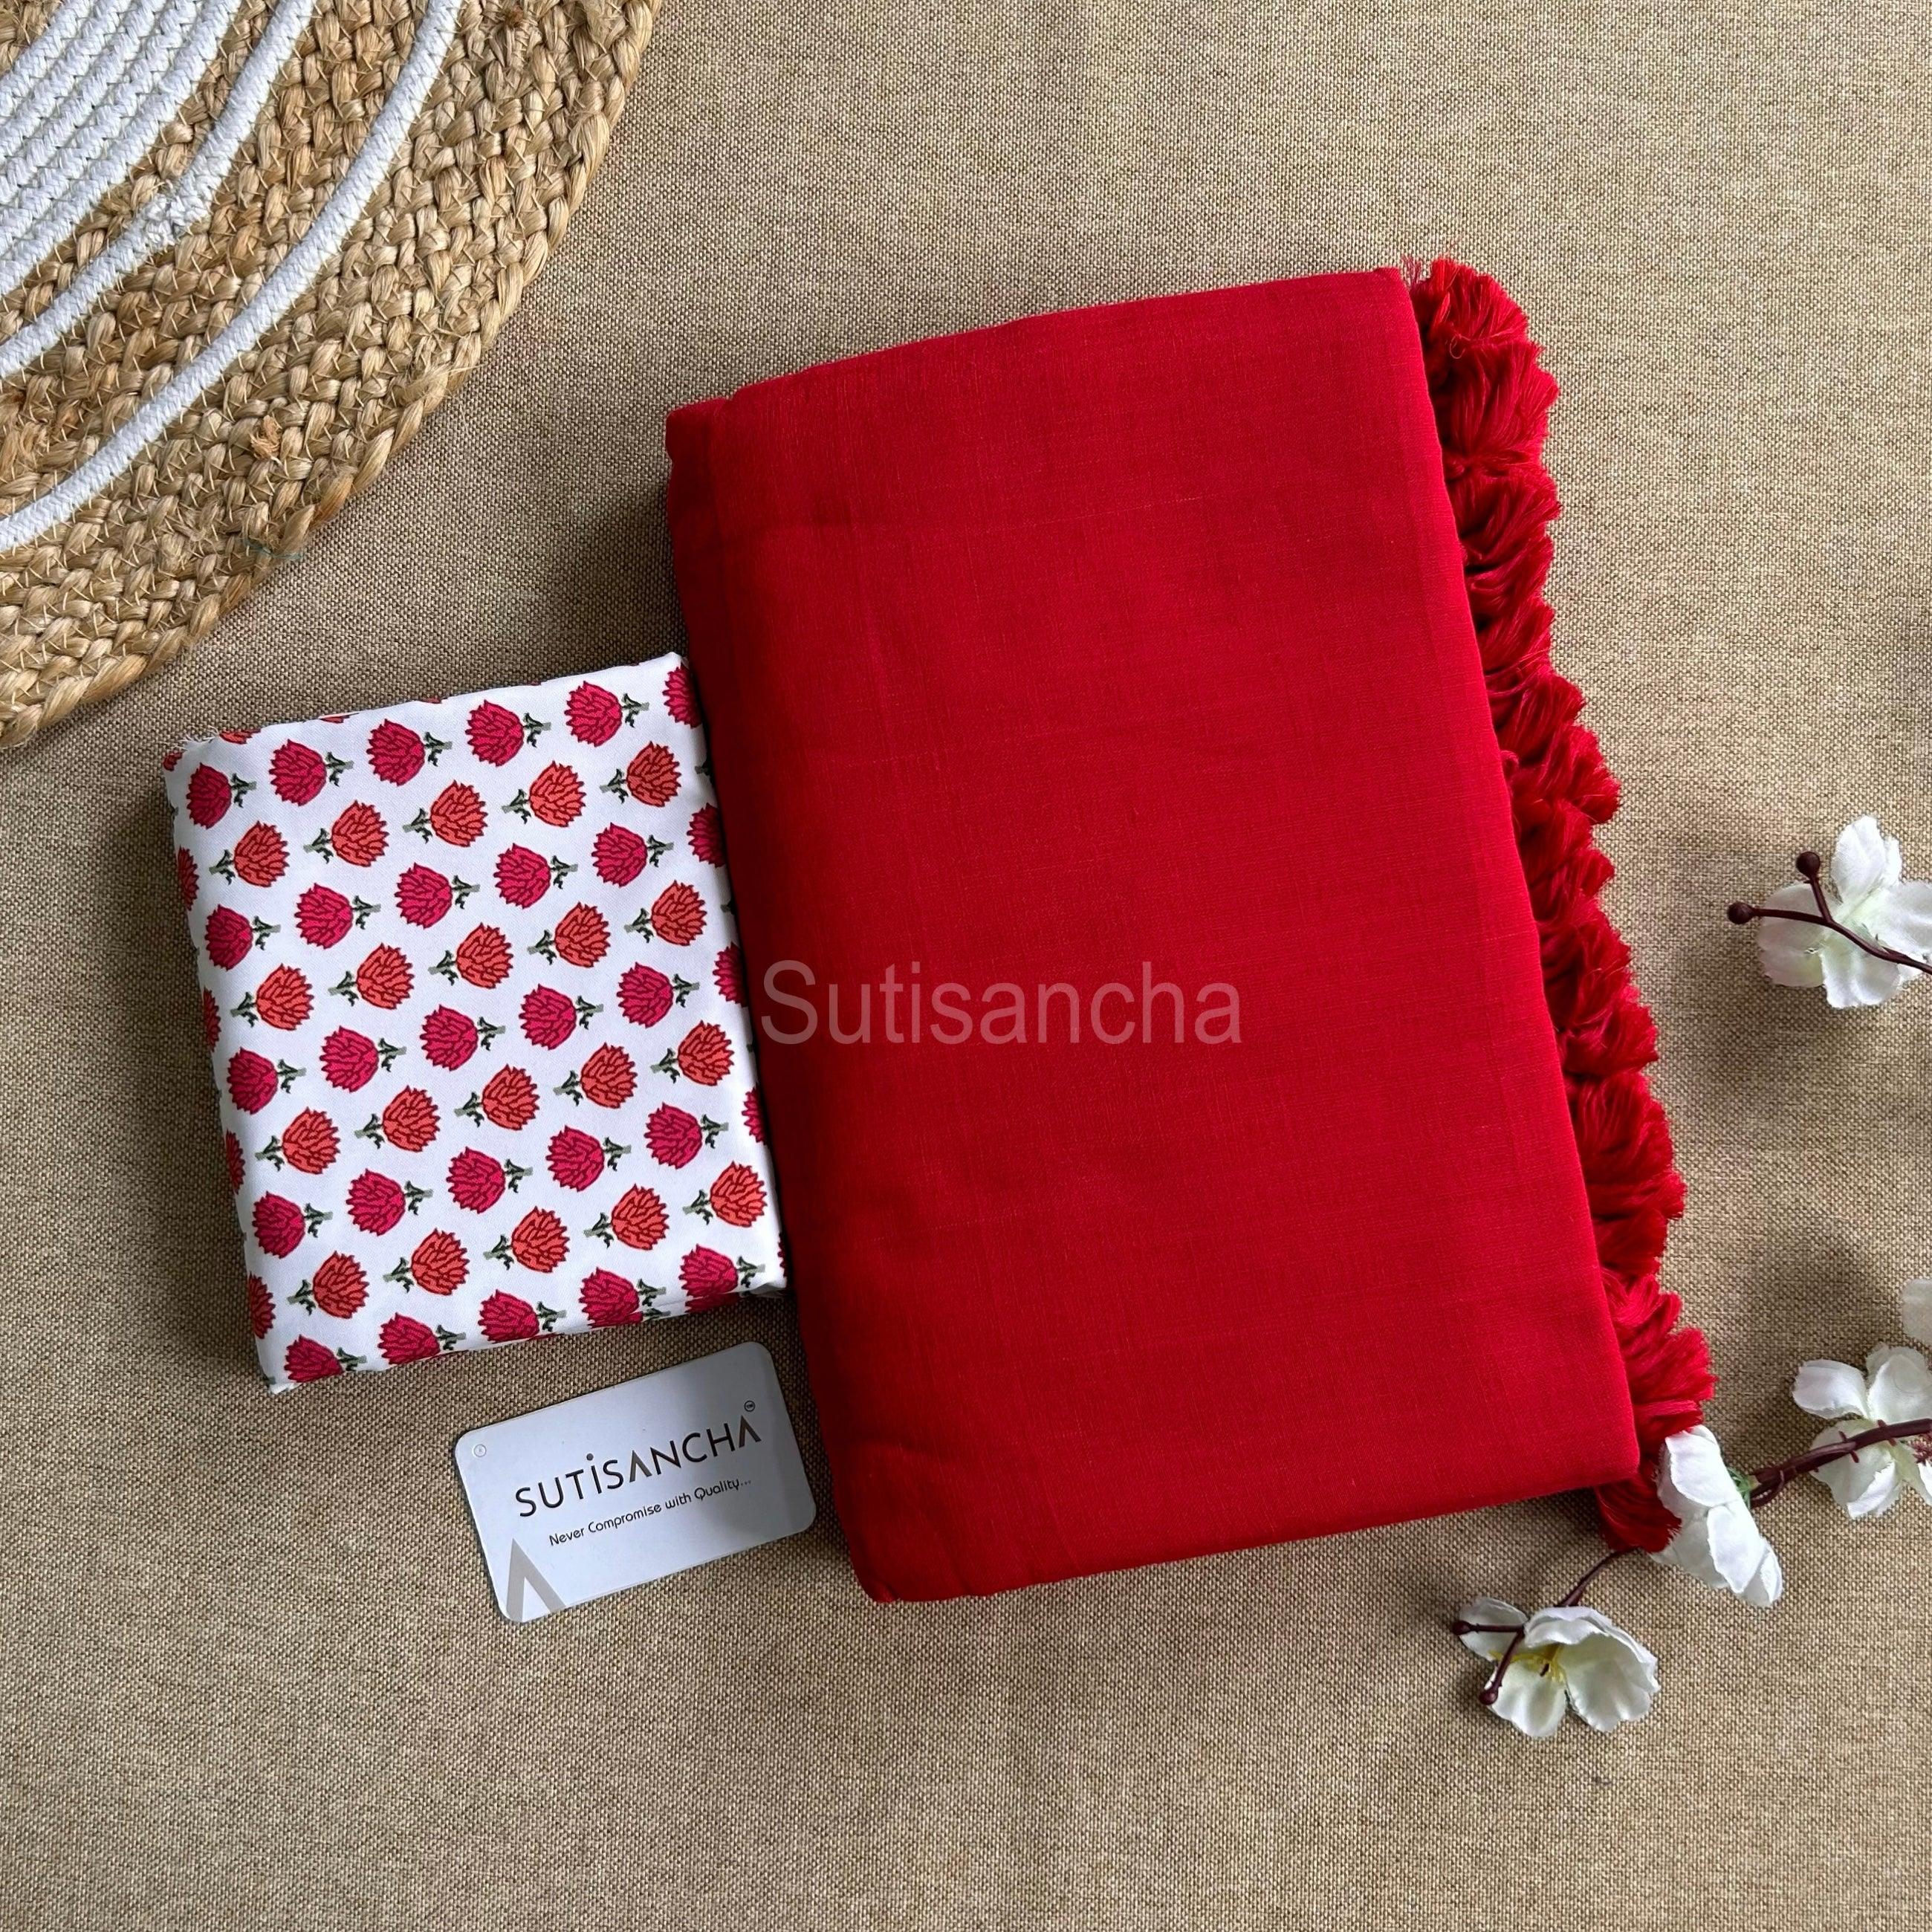 Sutisancha Red Plain Khadi Saree & Red Design Blouse - Suti Sancha